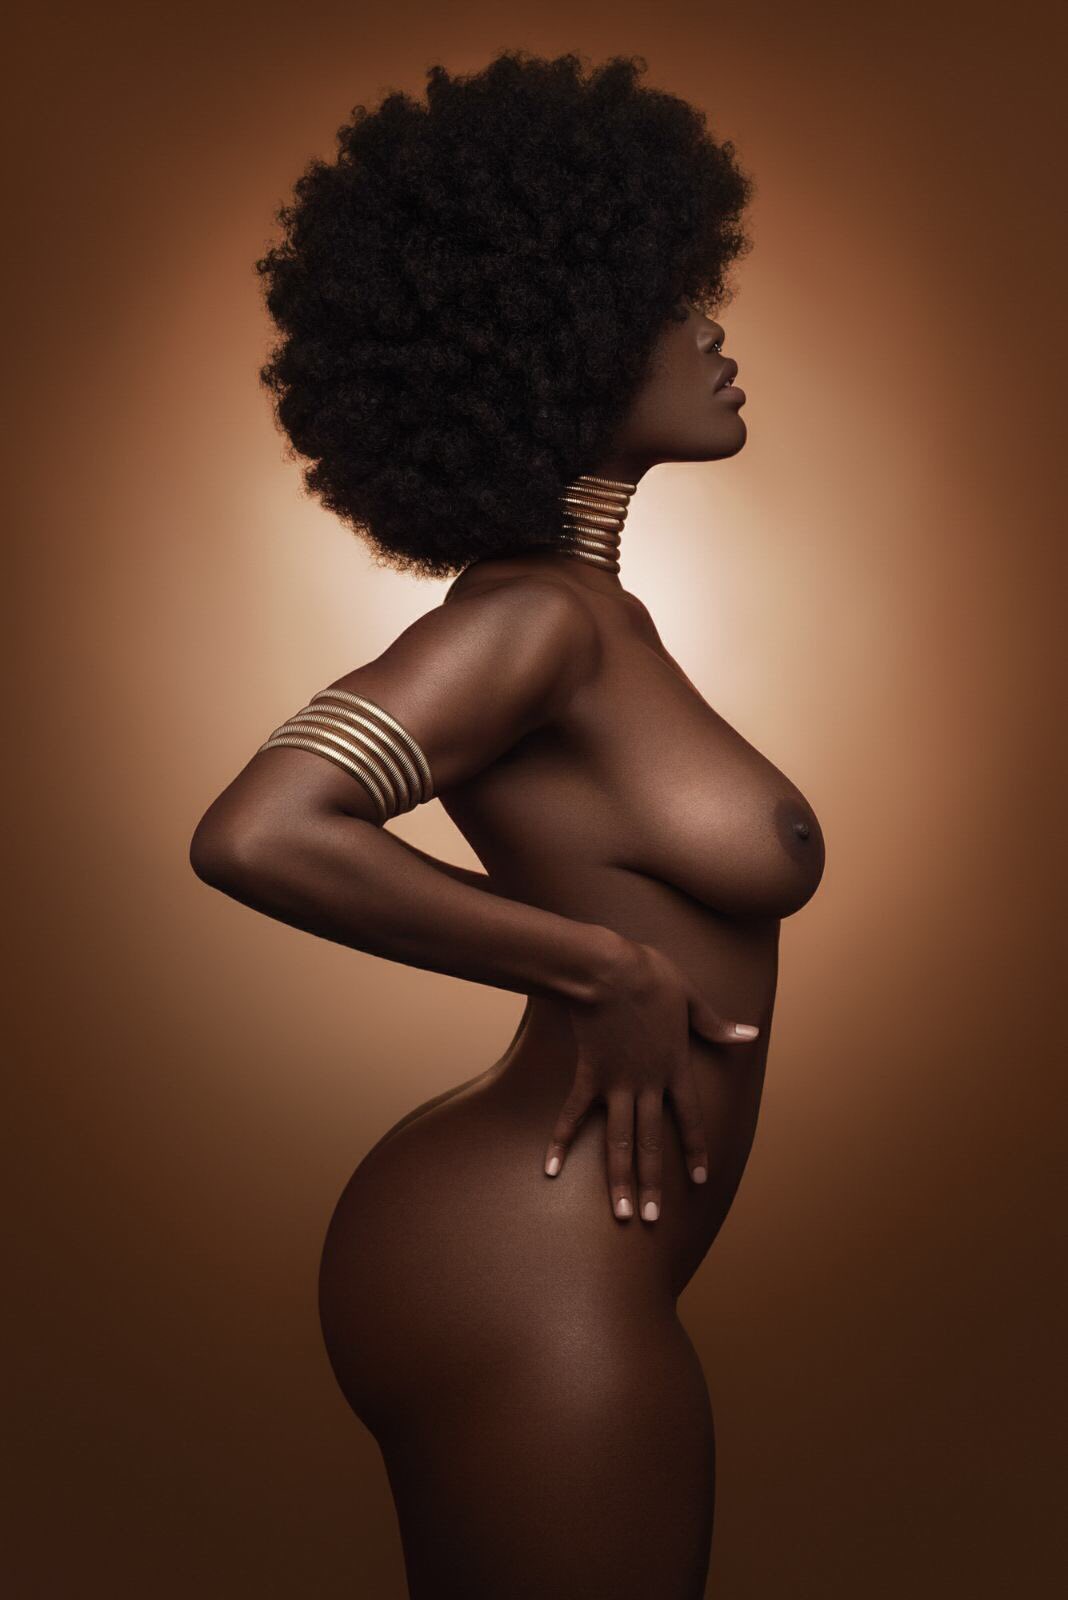 Afro big naked girls